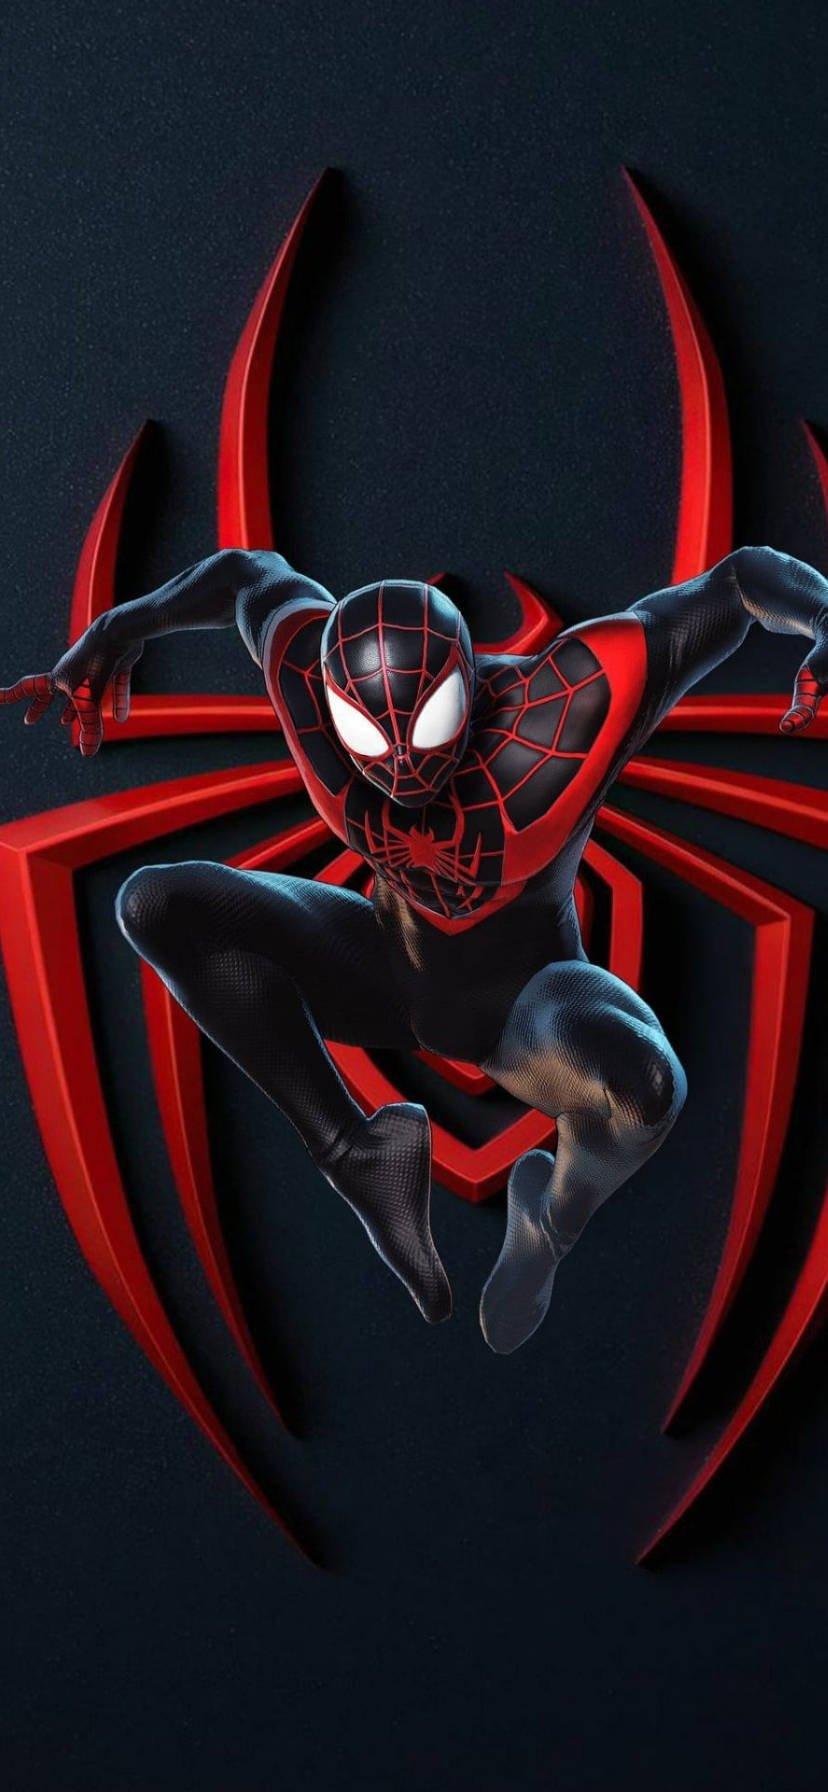 Spider-Man Miles Morales iPhone Wallpaper Photo